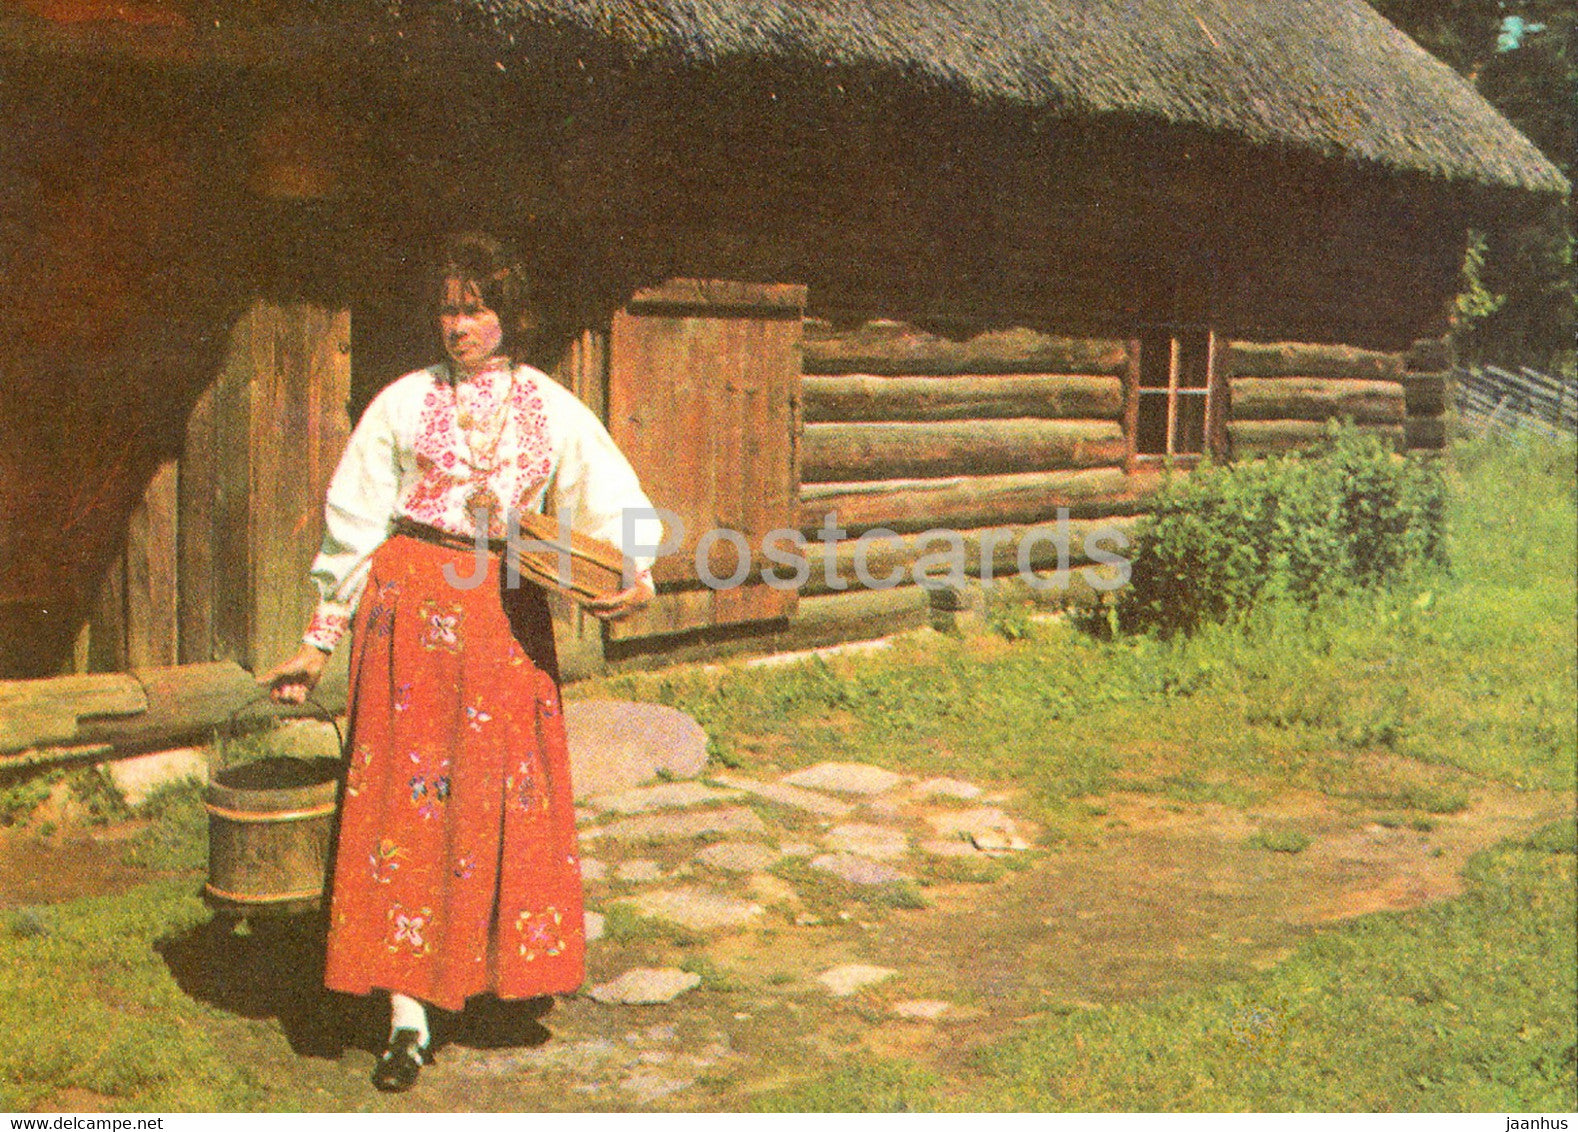 Estonian Open Air Museum - Lihula folk costumes - West Estonian Farmyard - 1977 - Estonia USSR - unused - JH Postcards